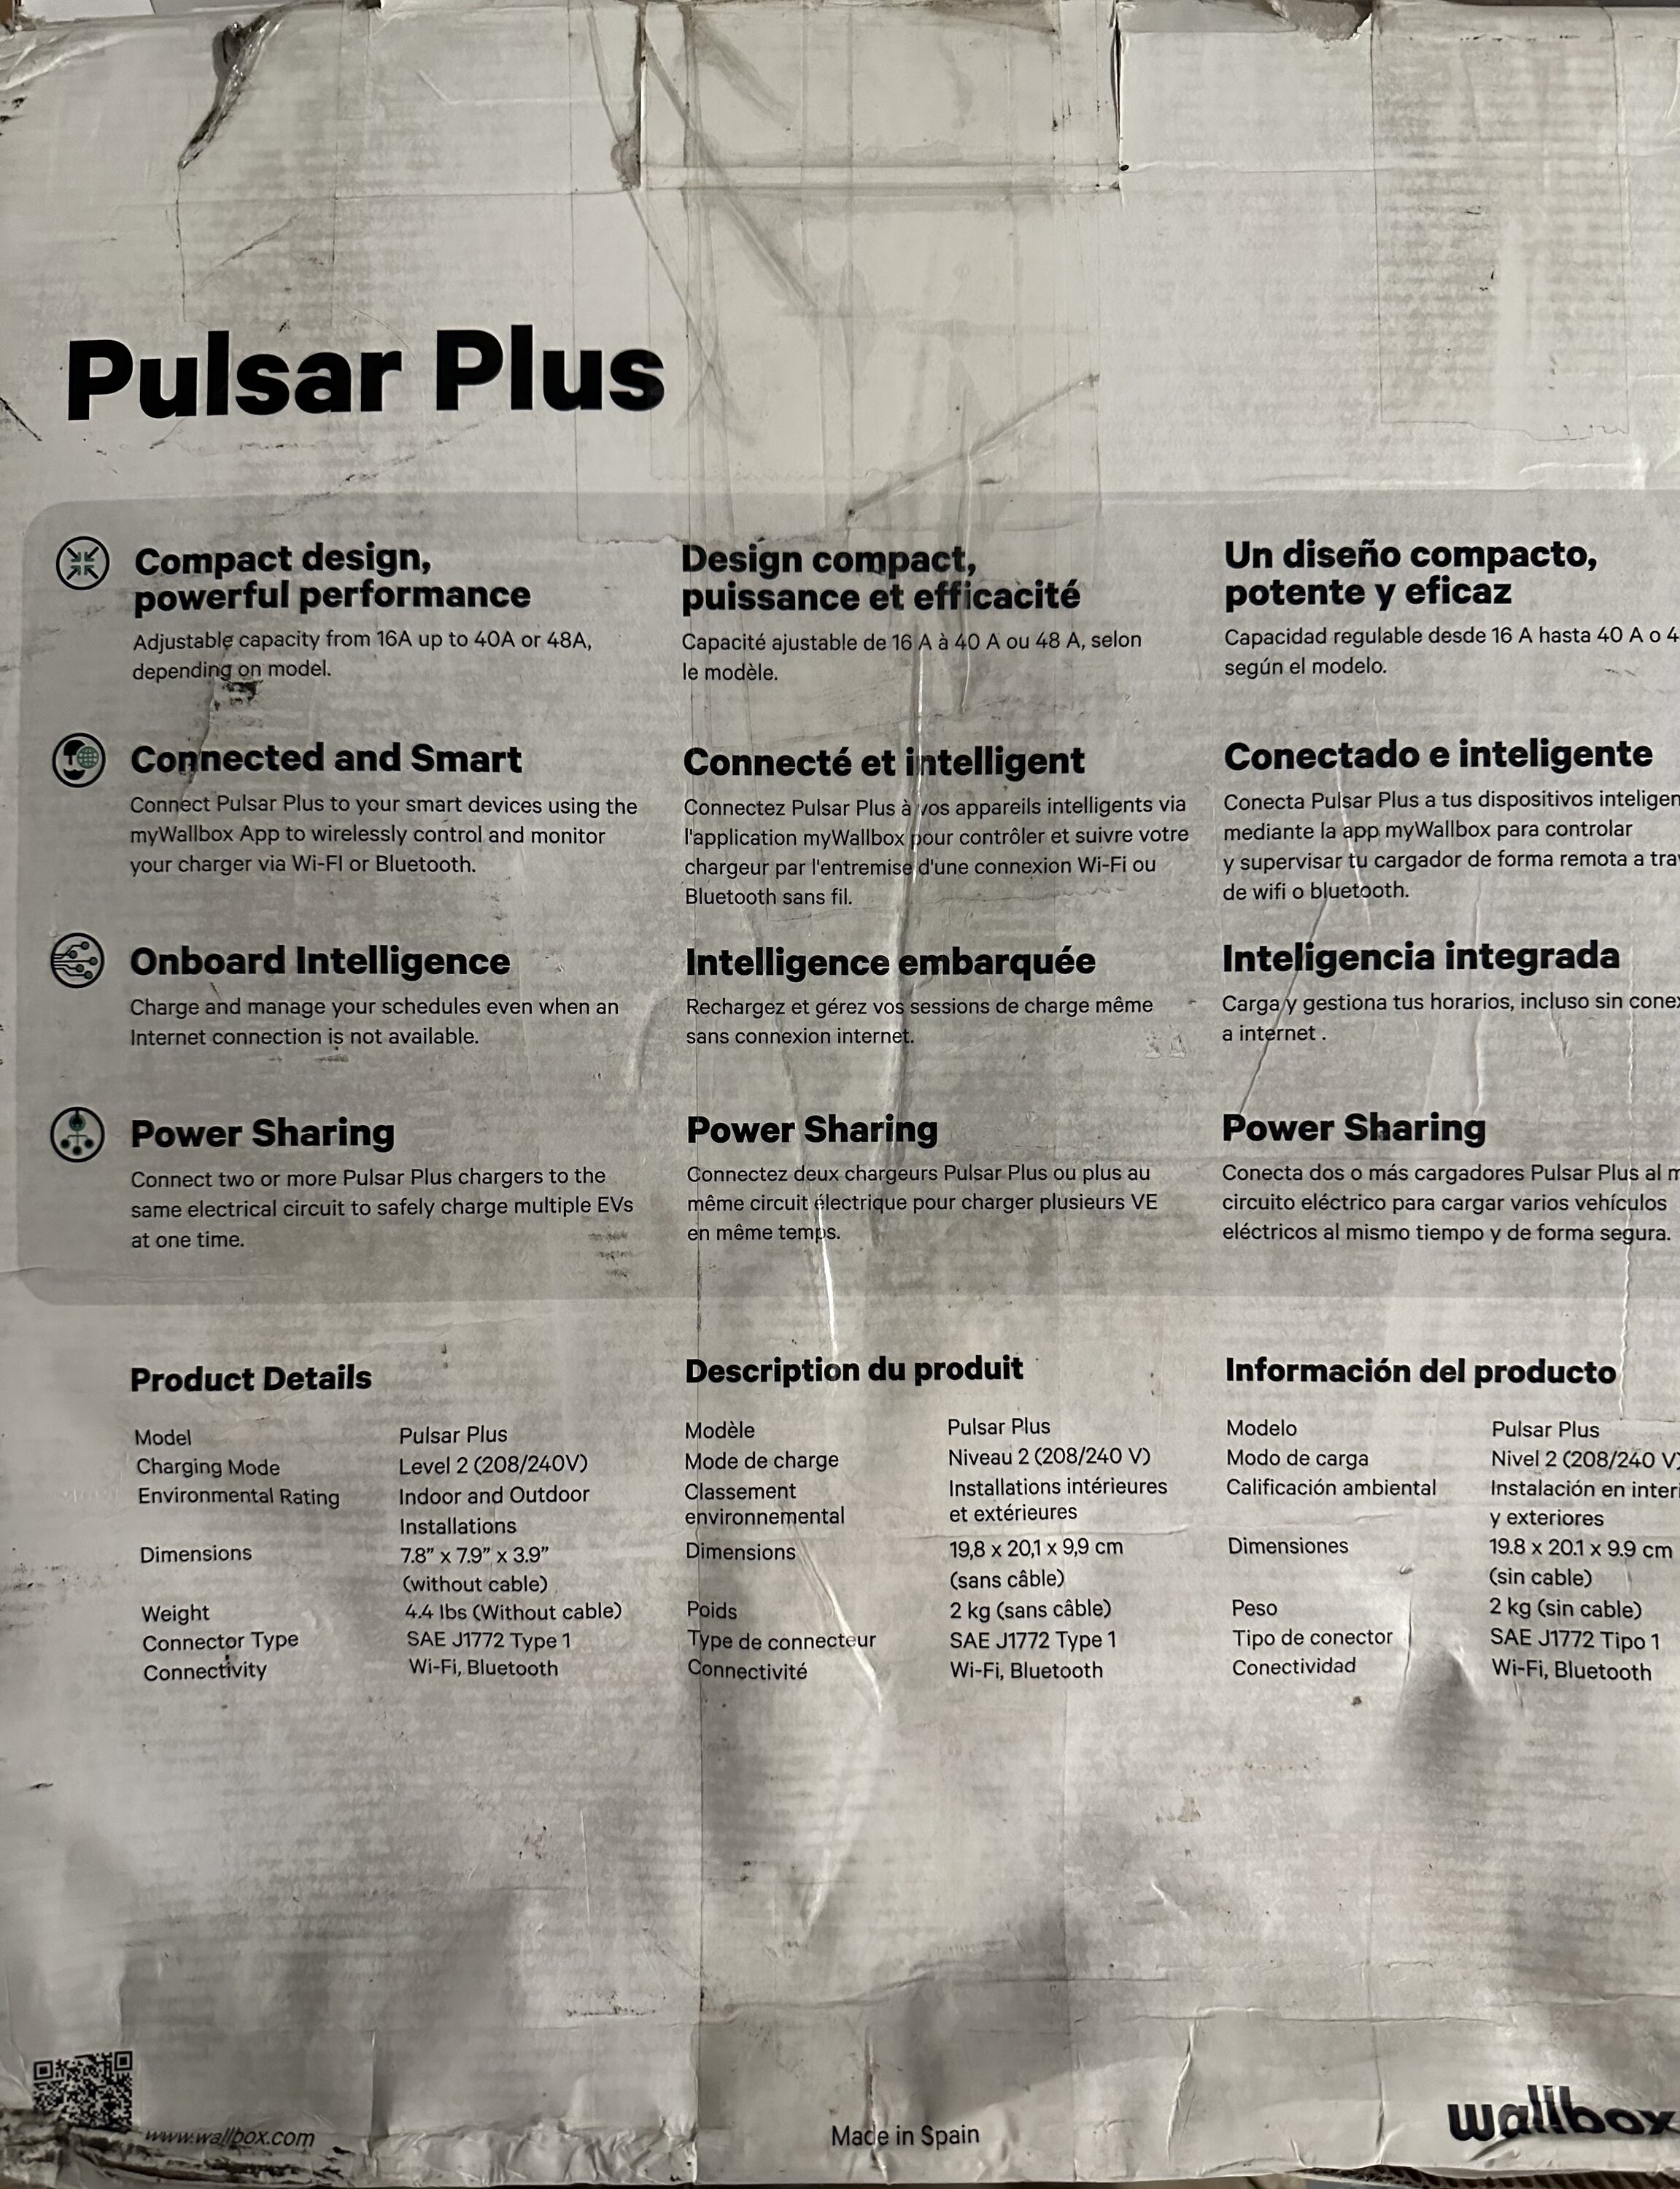  Wallbox Pulsar Plus Level 2 Electric Vehicle Smart